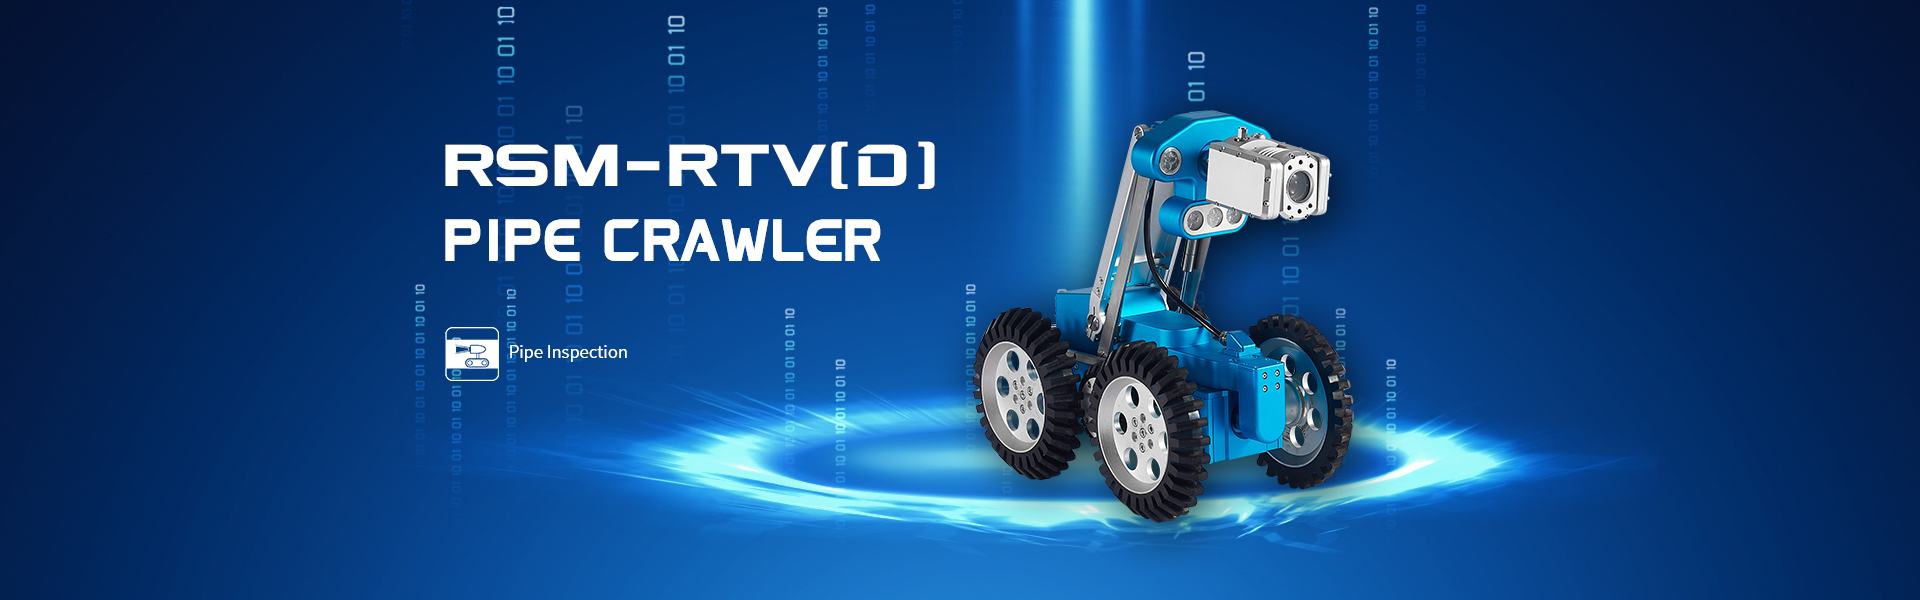 RSM-RTV (D) Pipe Crawler